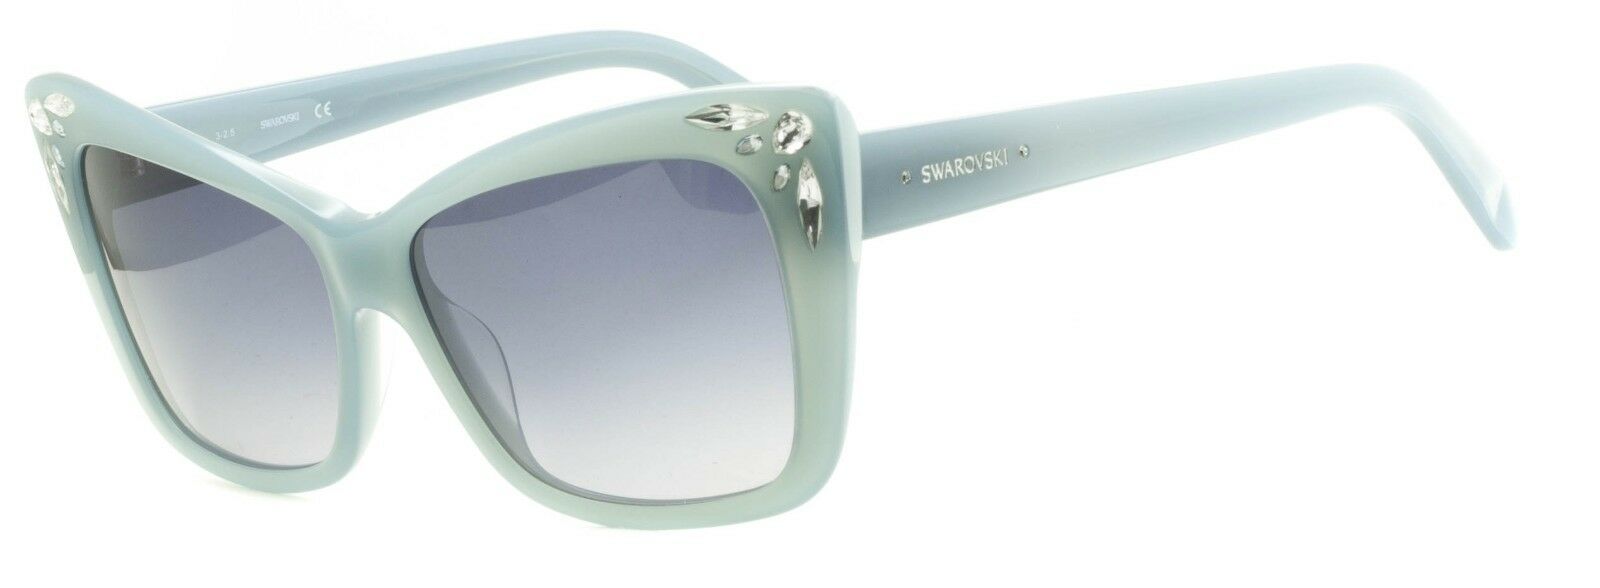 SWAROVSKI FAME SW103 90B Sunglasses Shades Ladies BNIB Brand New in Case- New